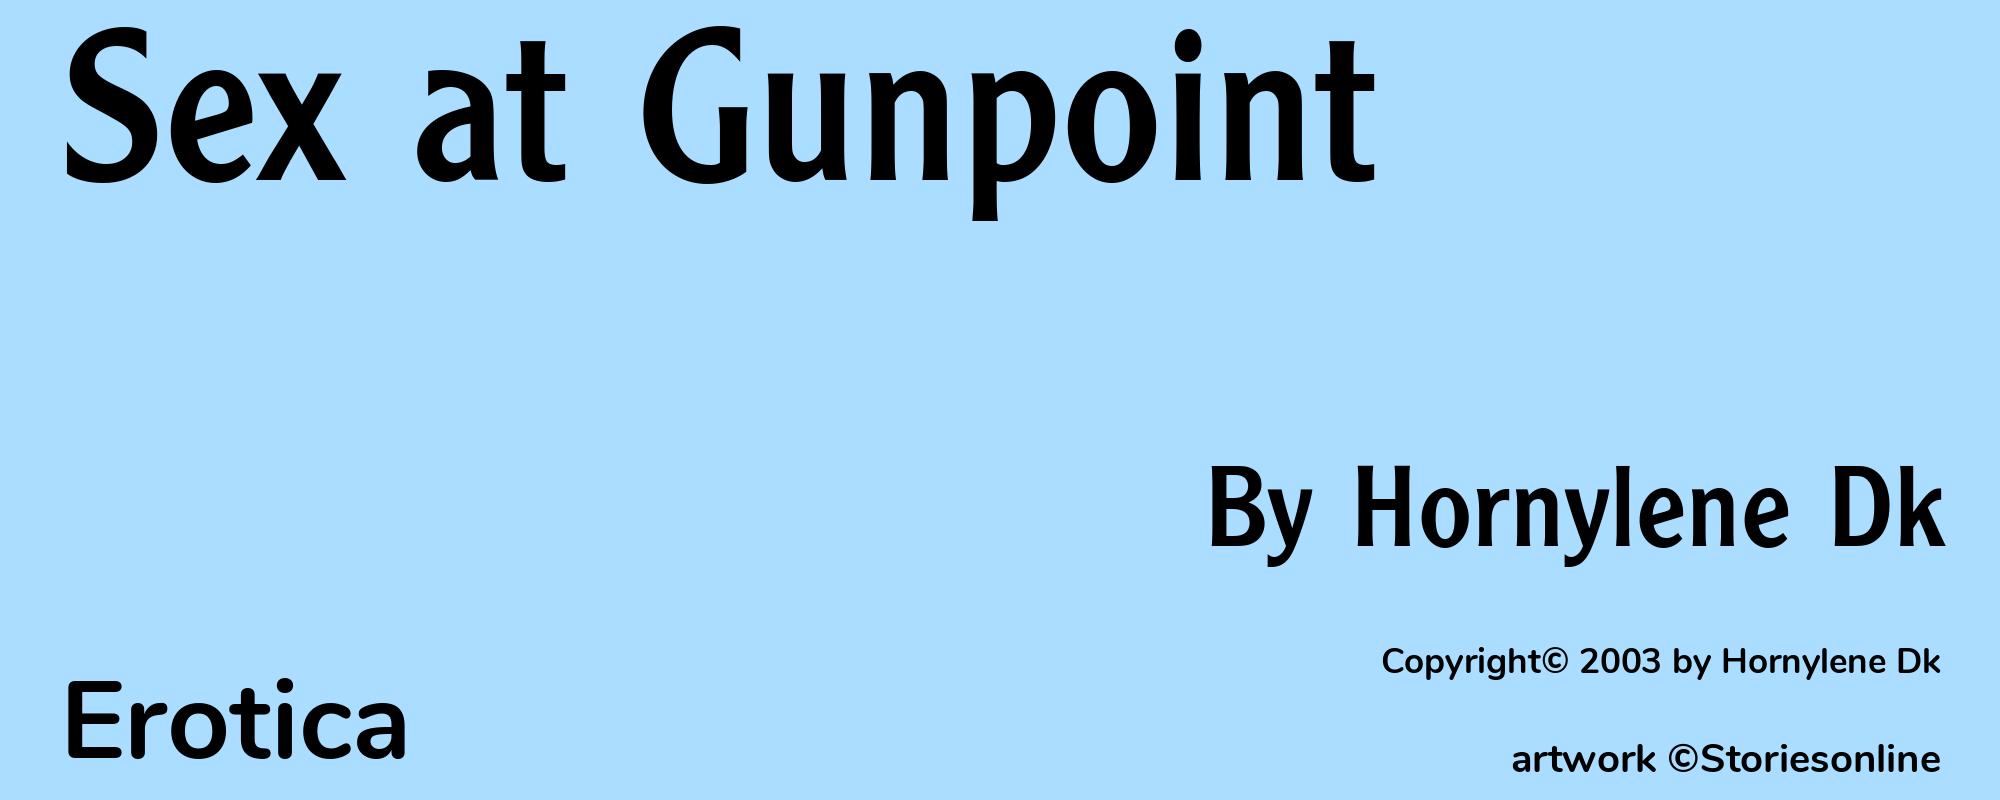 Sex at Gunpoint - Cover